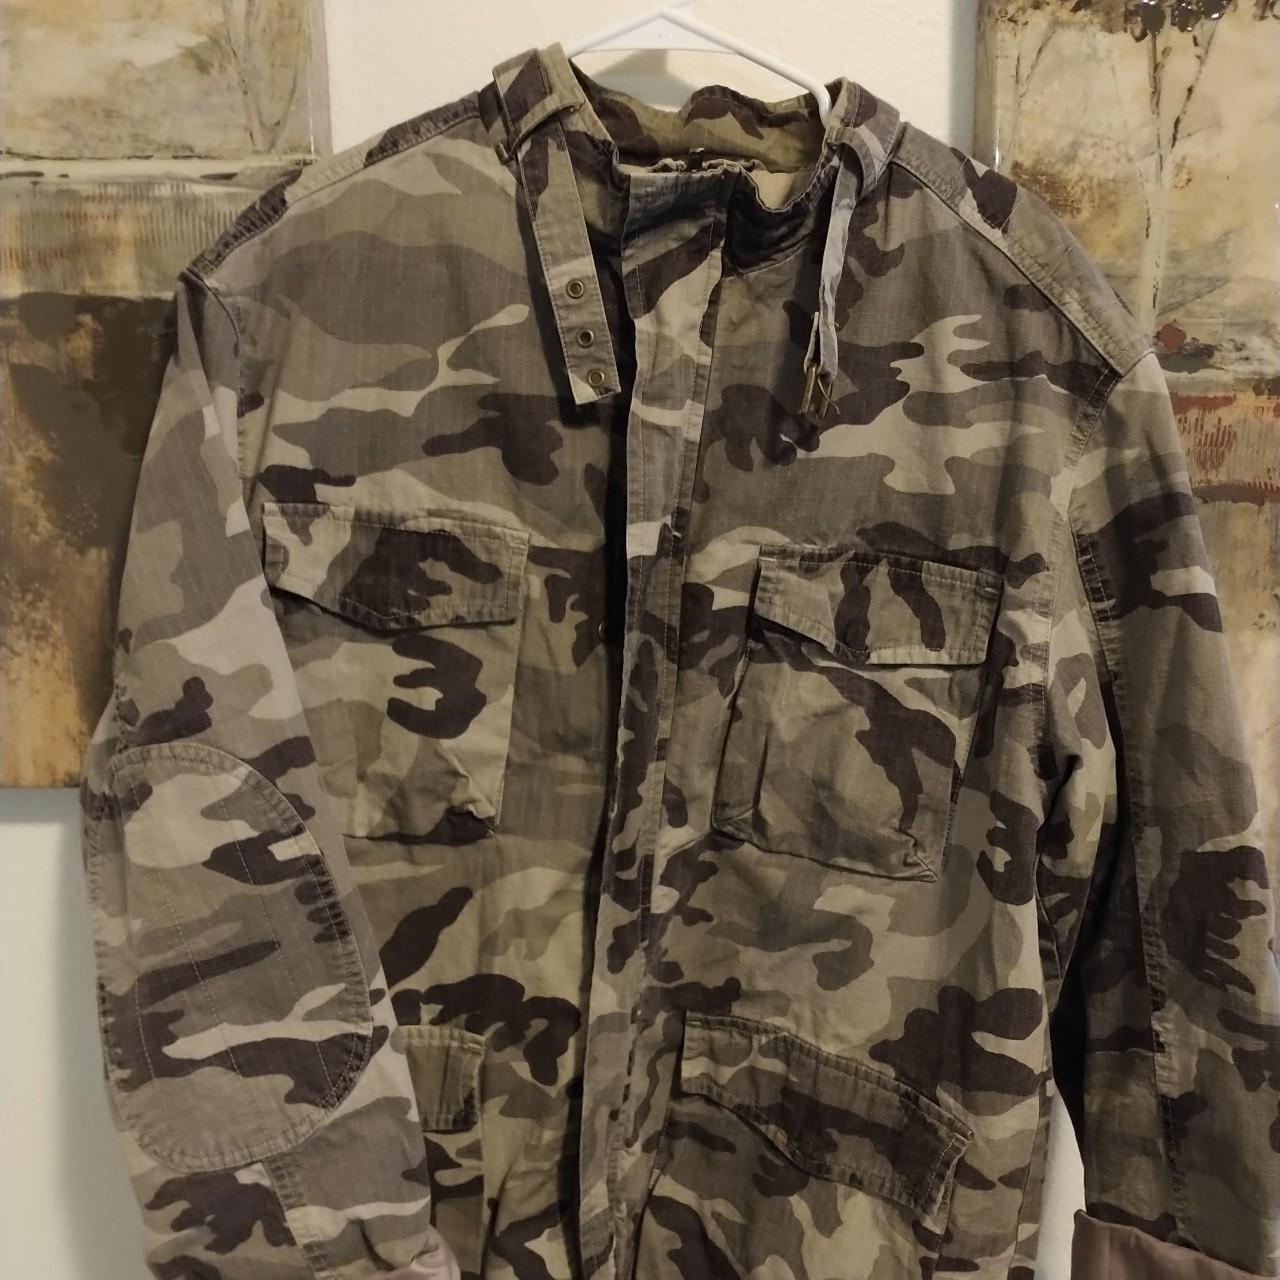 Product Image 1 - River island camouflage jacket great